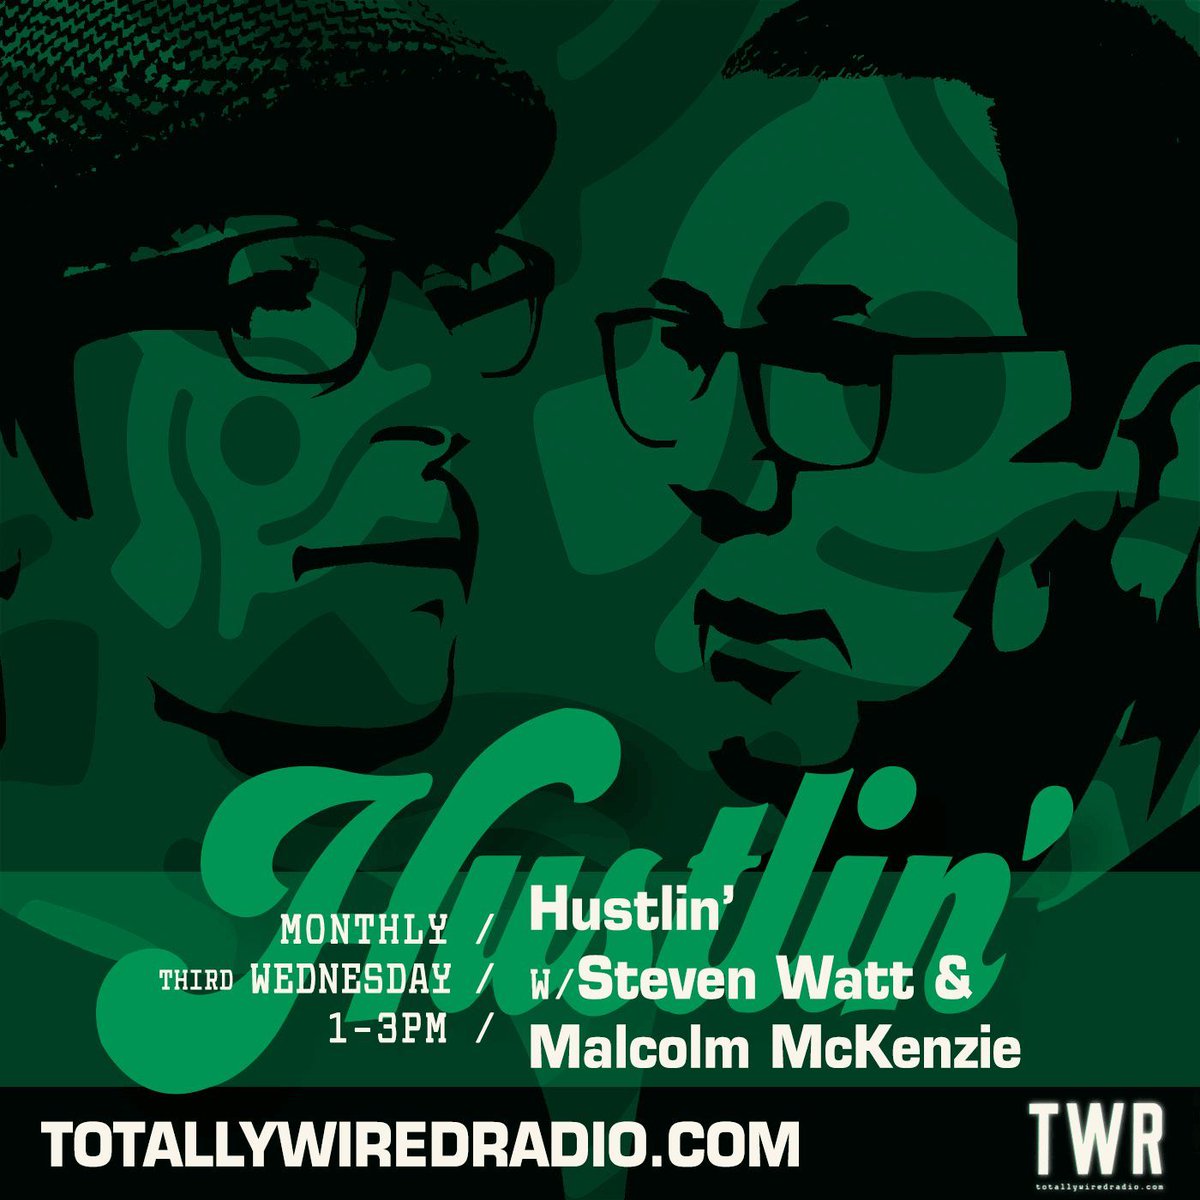 Hustlin’ w/ Steven Watt & Malcolm McKenzie #startingsoon on #TotallyWiredRadio Listen @ Link in bio.
-
#MusicIsLife #London #Scotland 
-
#Soul #FunkSoulJazz #RhythmAndBlues #AfroLatin #AcidJazz